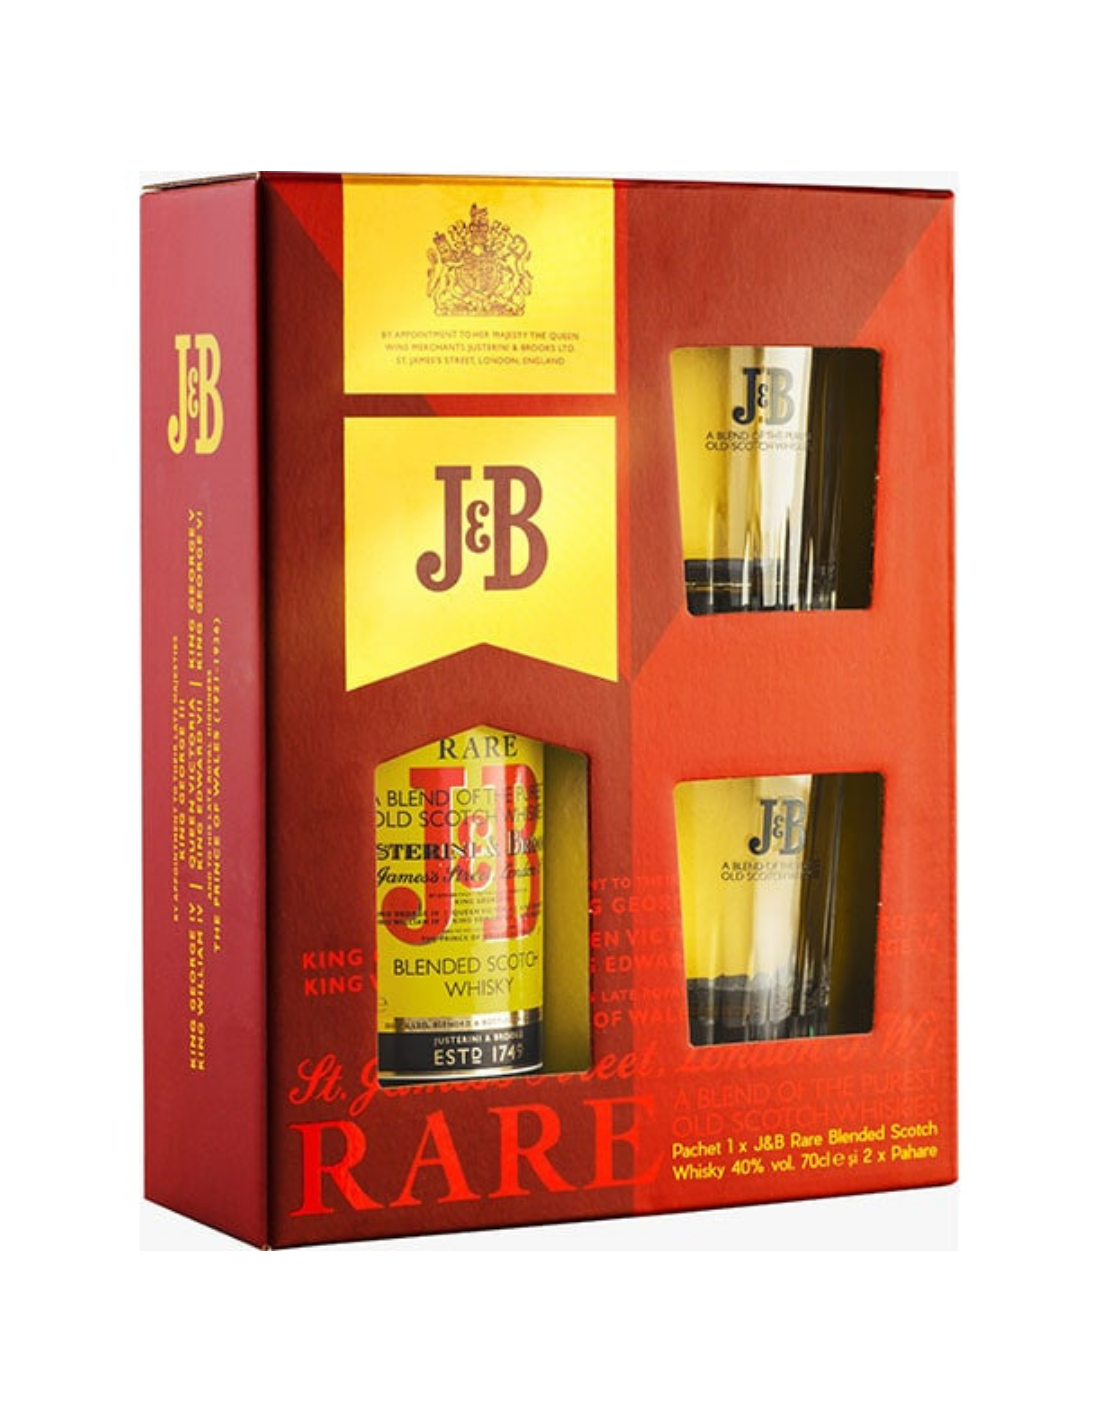 Whisky J&B Rare + 2 Pahare, 0.7L, 40% alc., Scotia alcooldiscount.ro